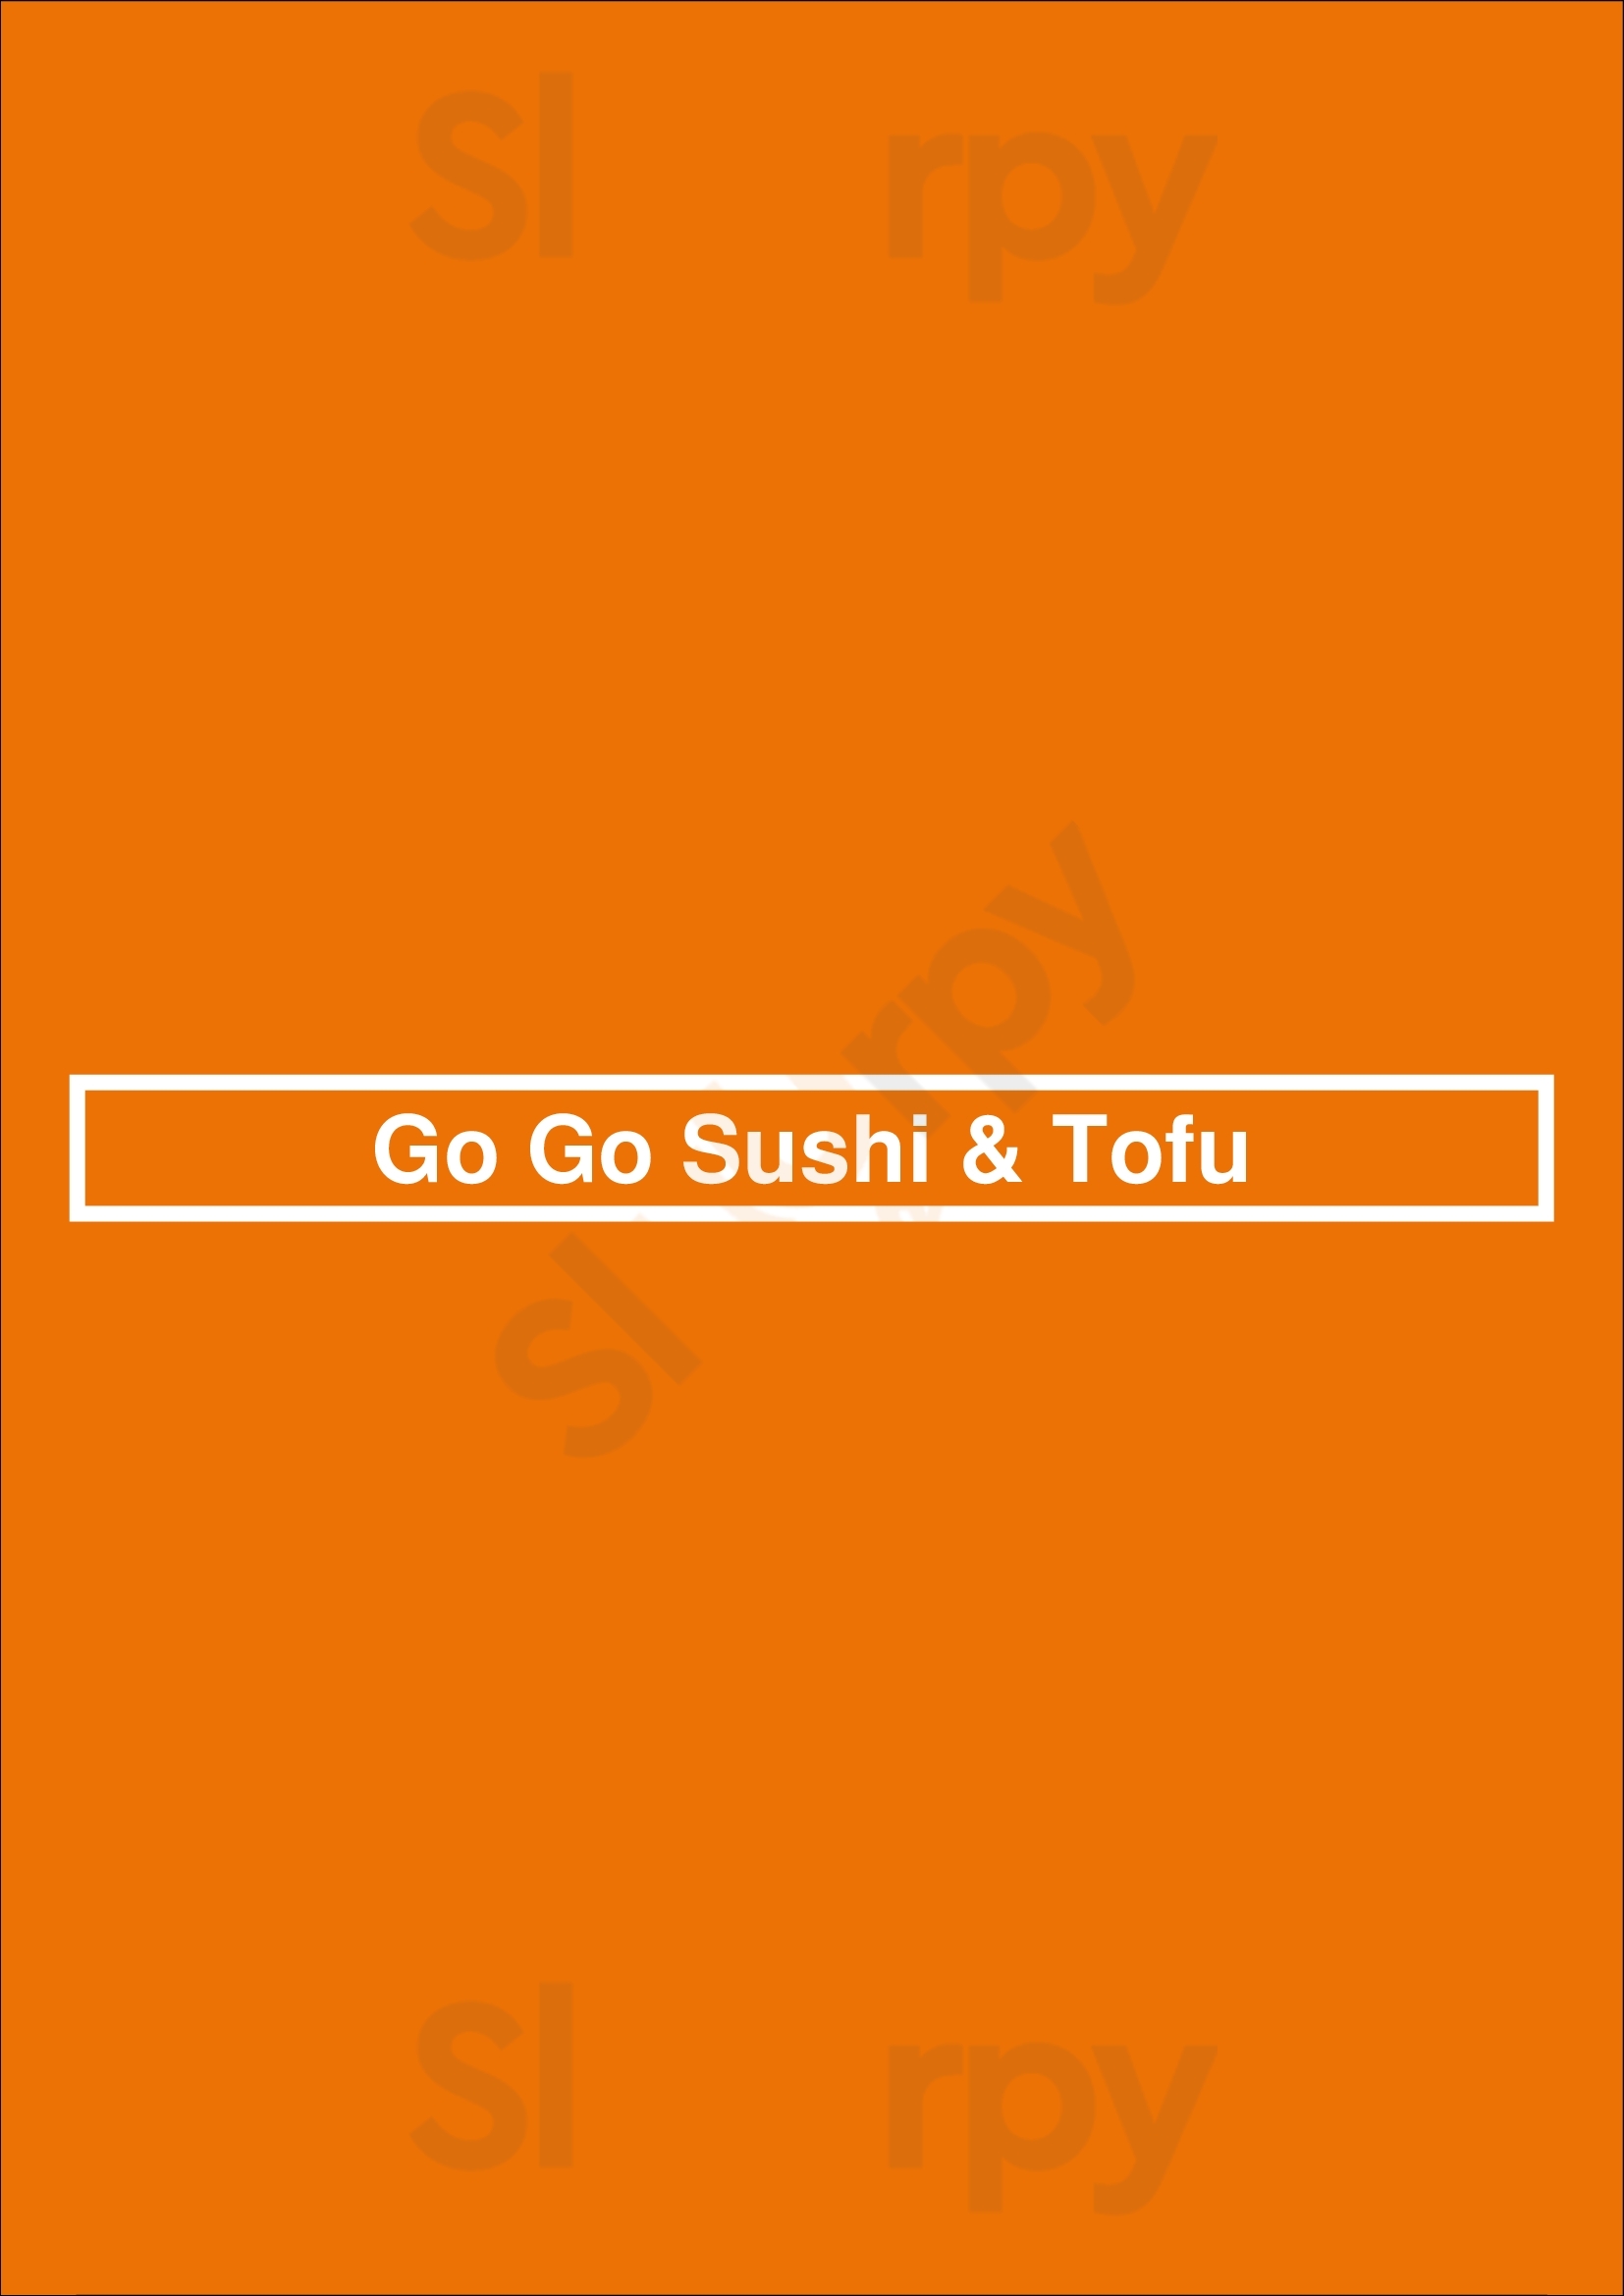 Go Go Sushi & Tofu La Jolla Menu - 1